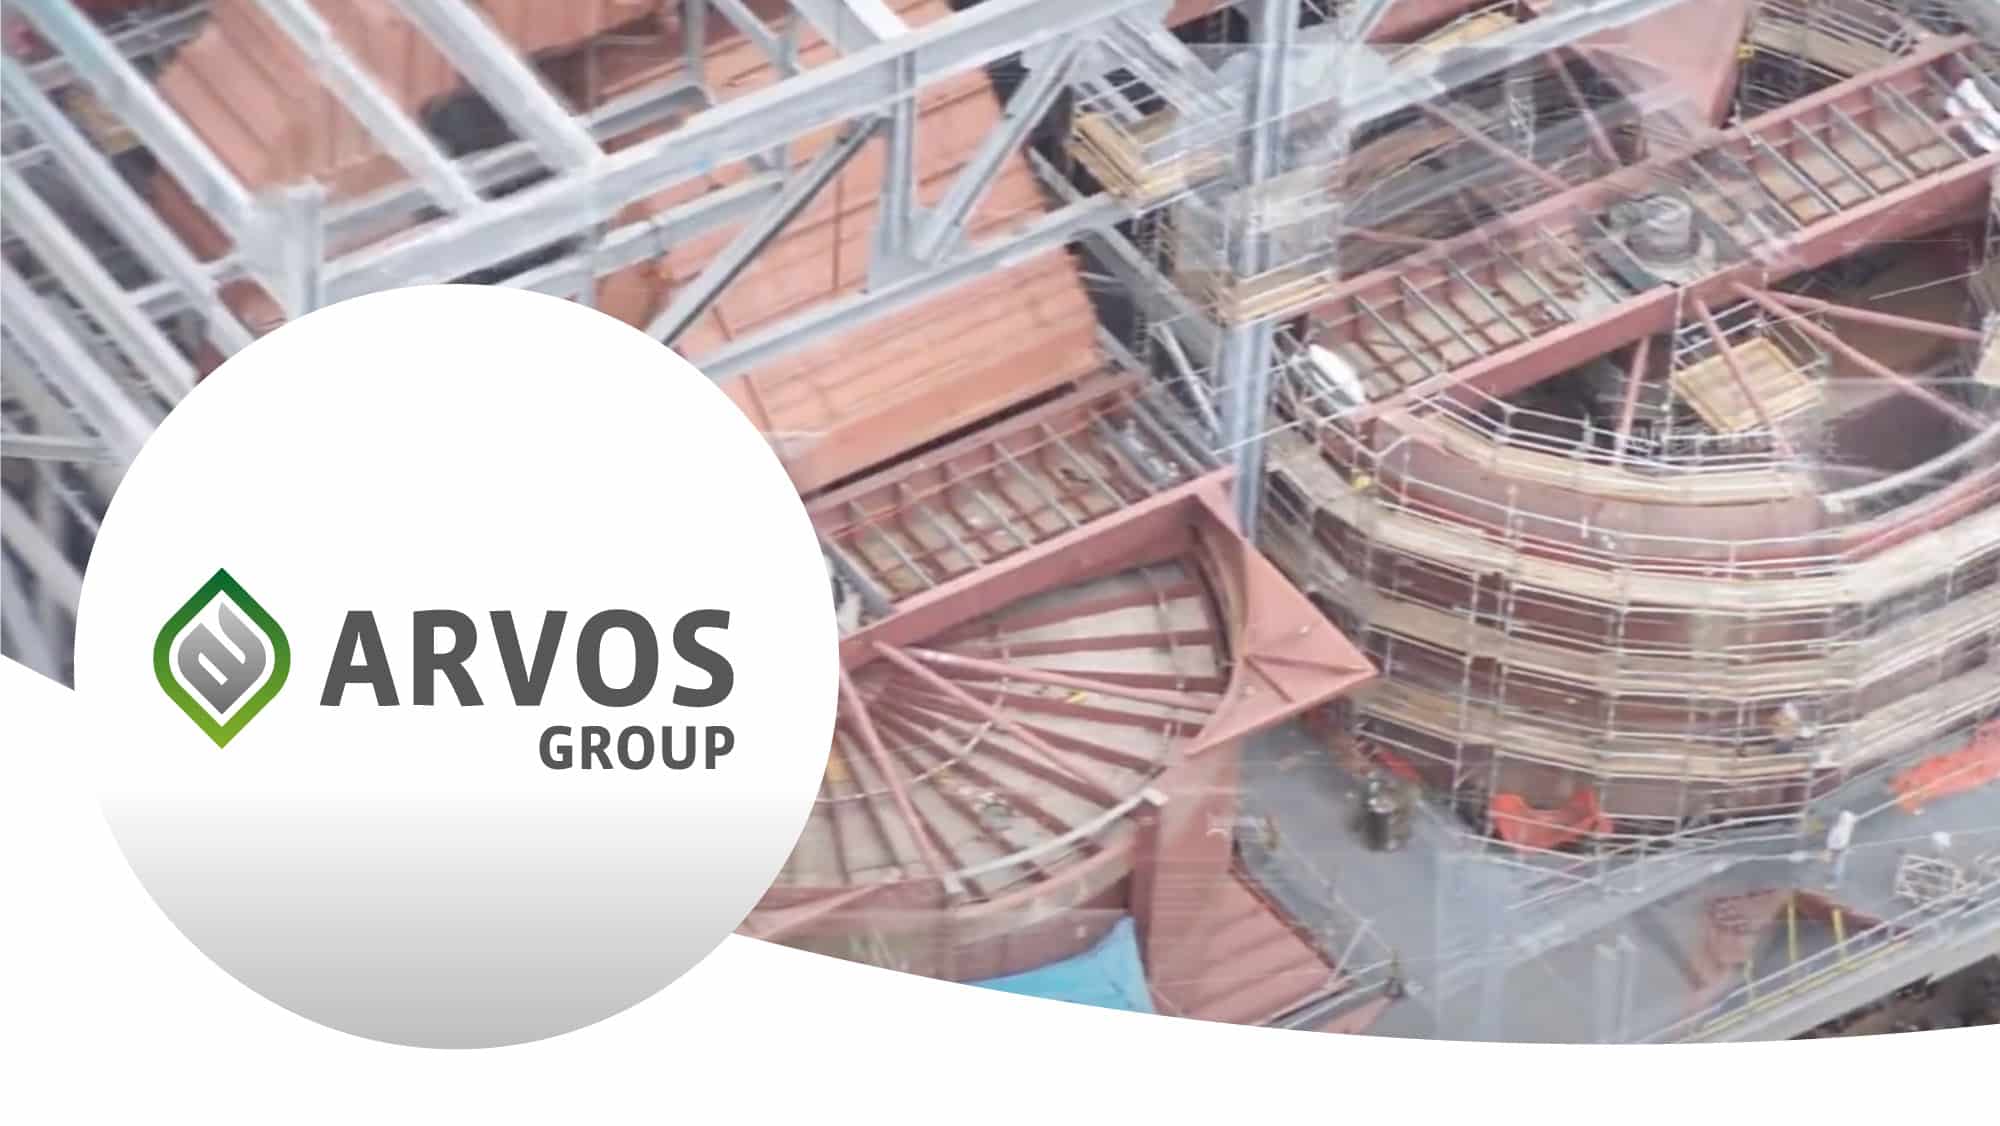 ARVOS sets new standards with JD Edwards